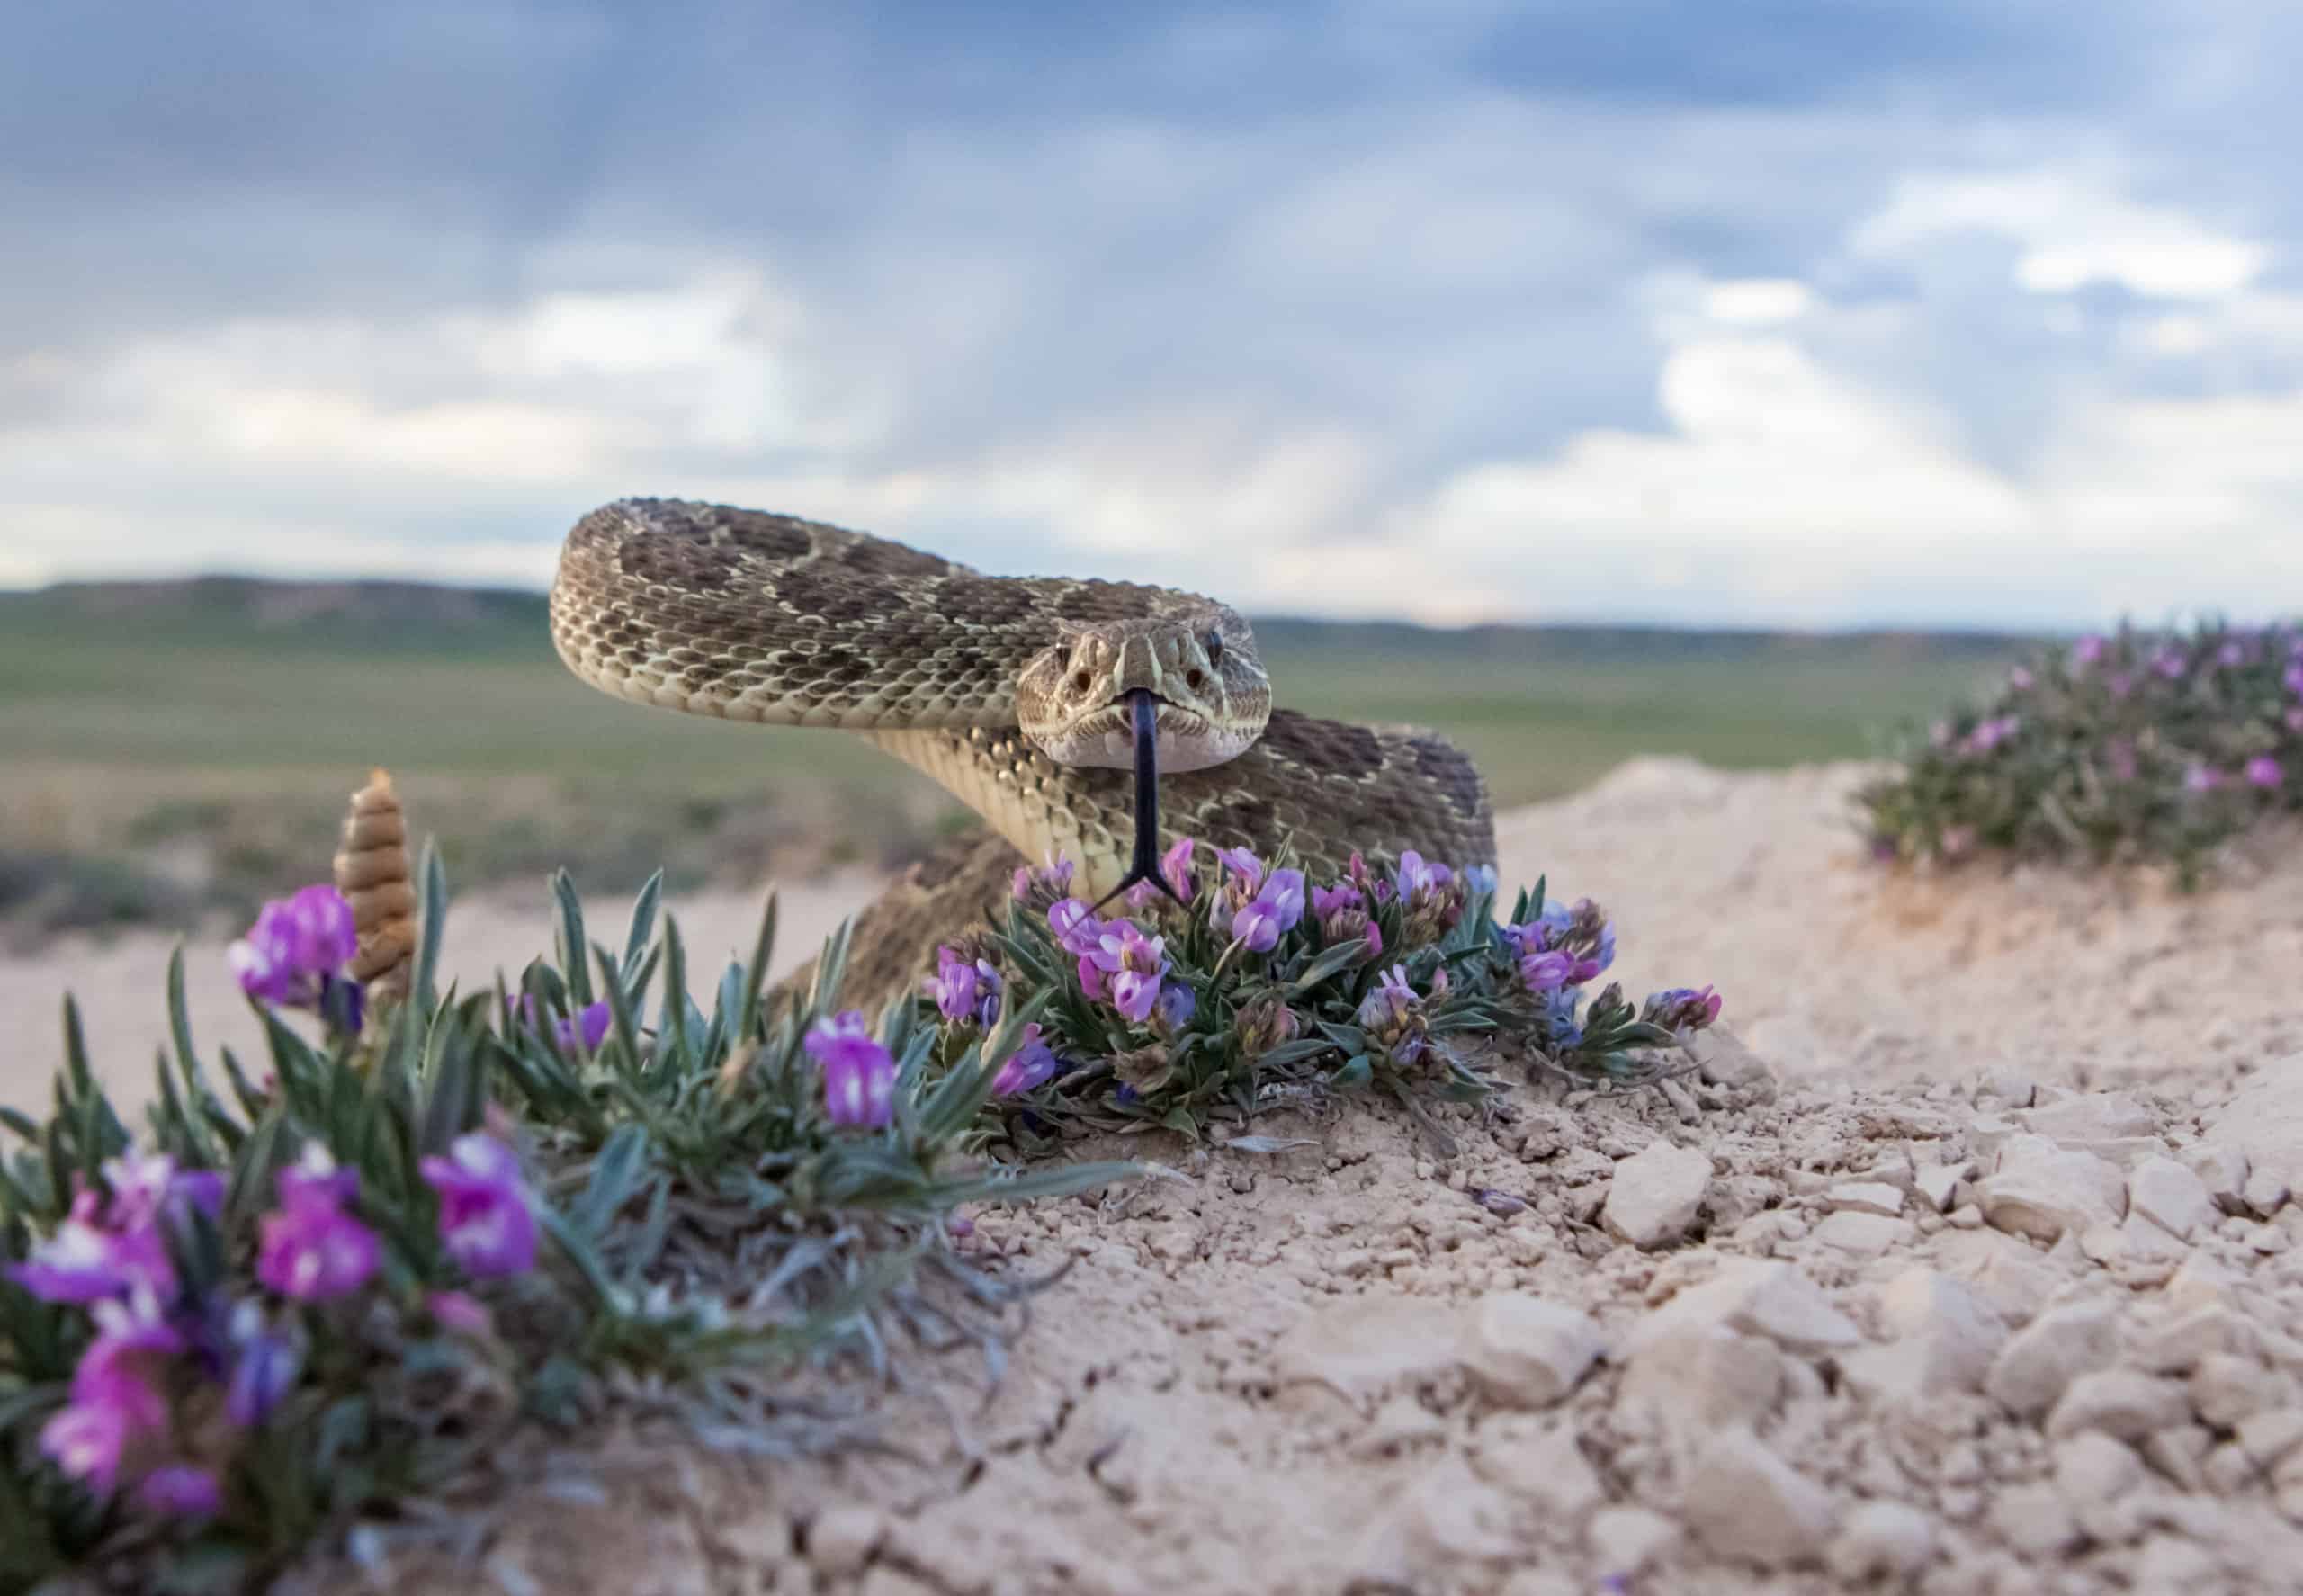 Portrait of a Rattlesnake